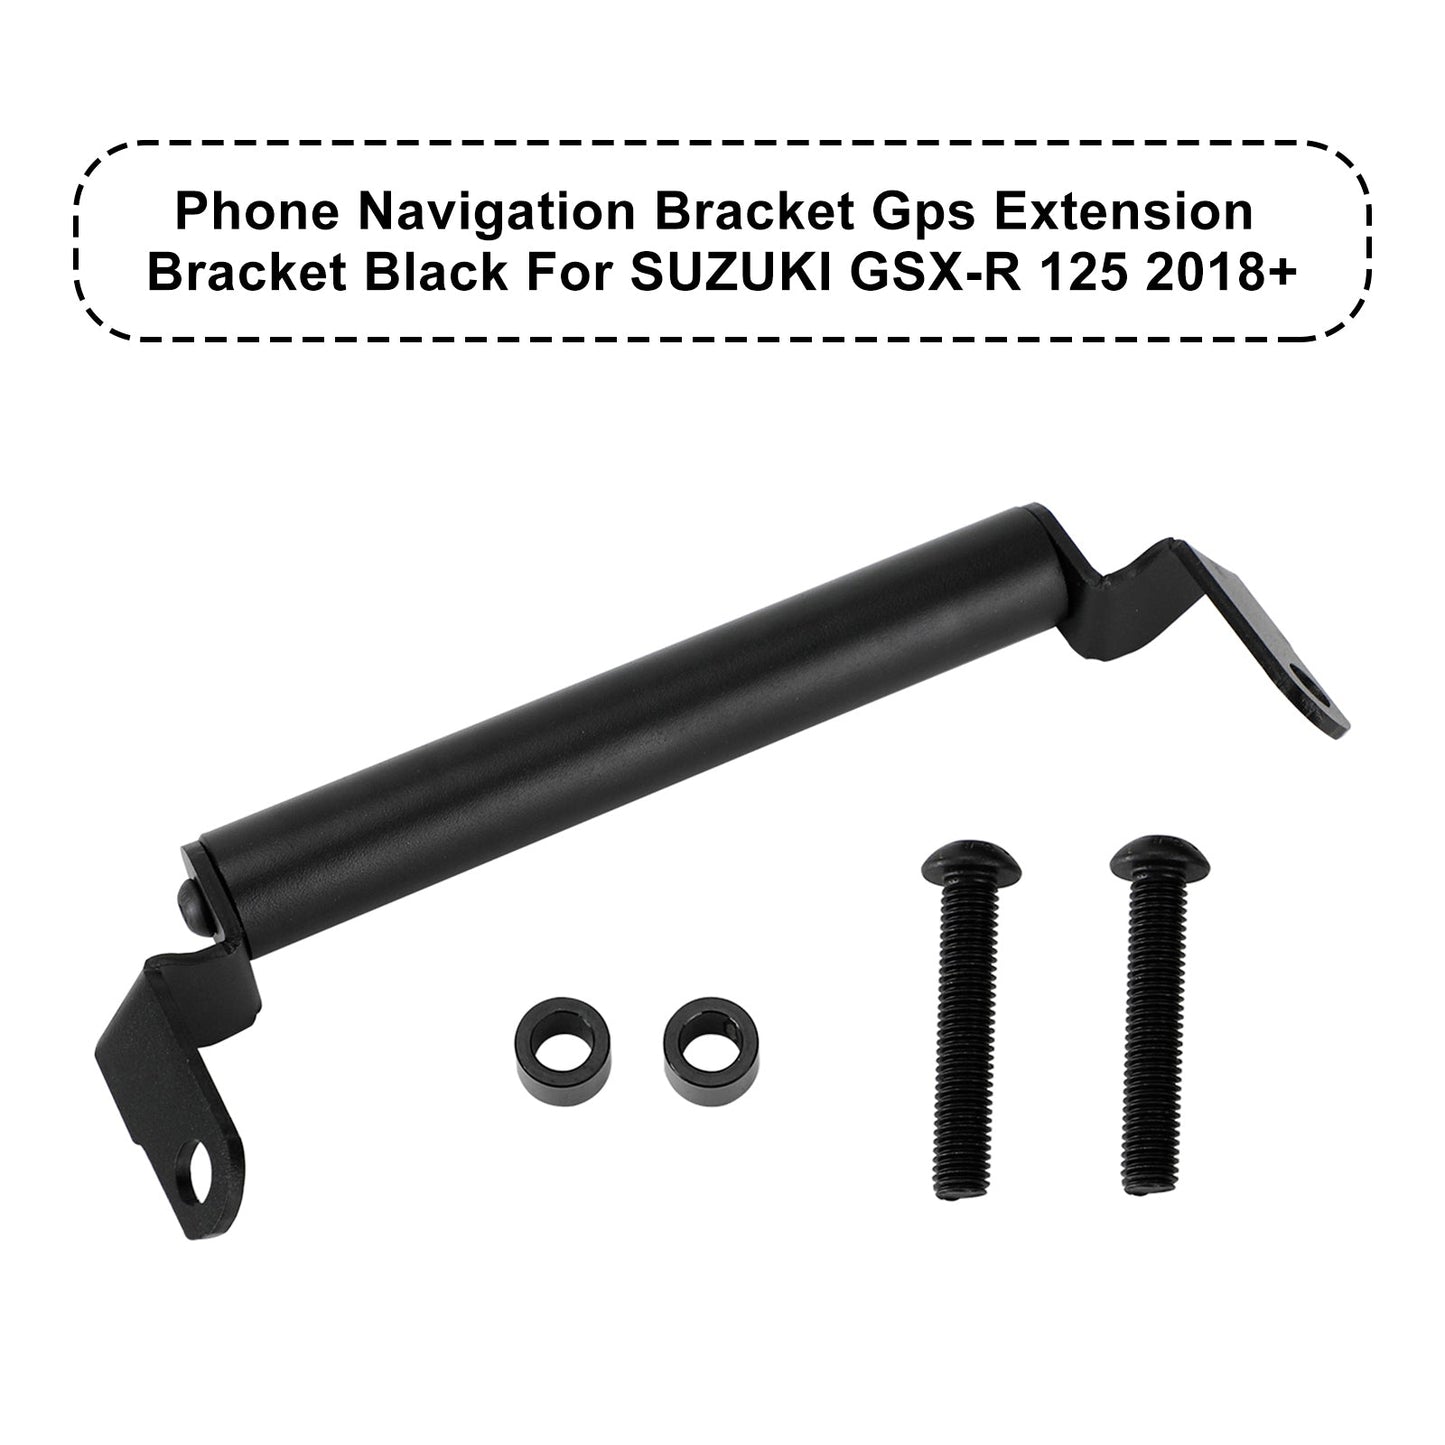 Suzuki Gsx-R 125 2018+ Gps Extension Bracket Phone Navi Bracket Black